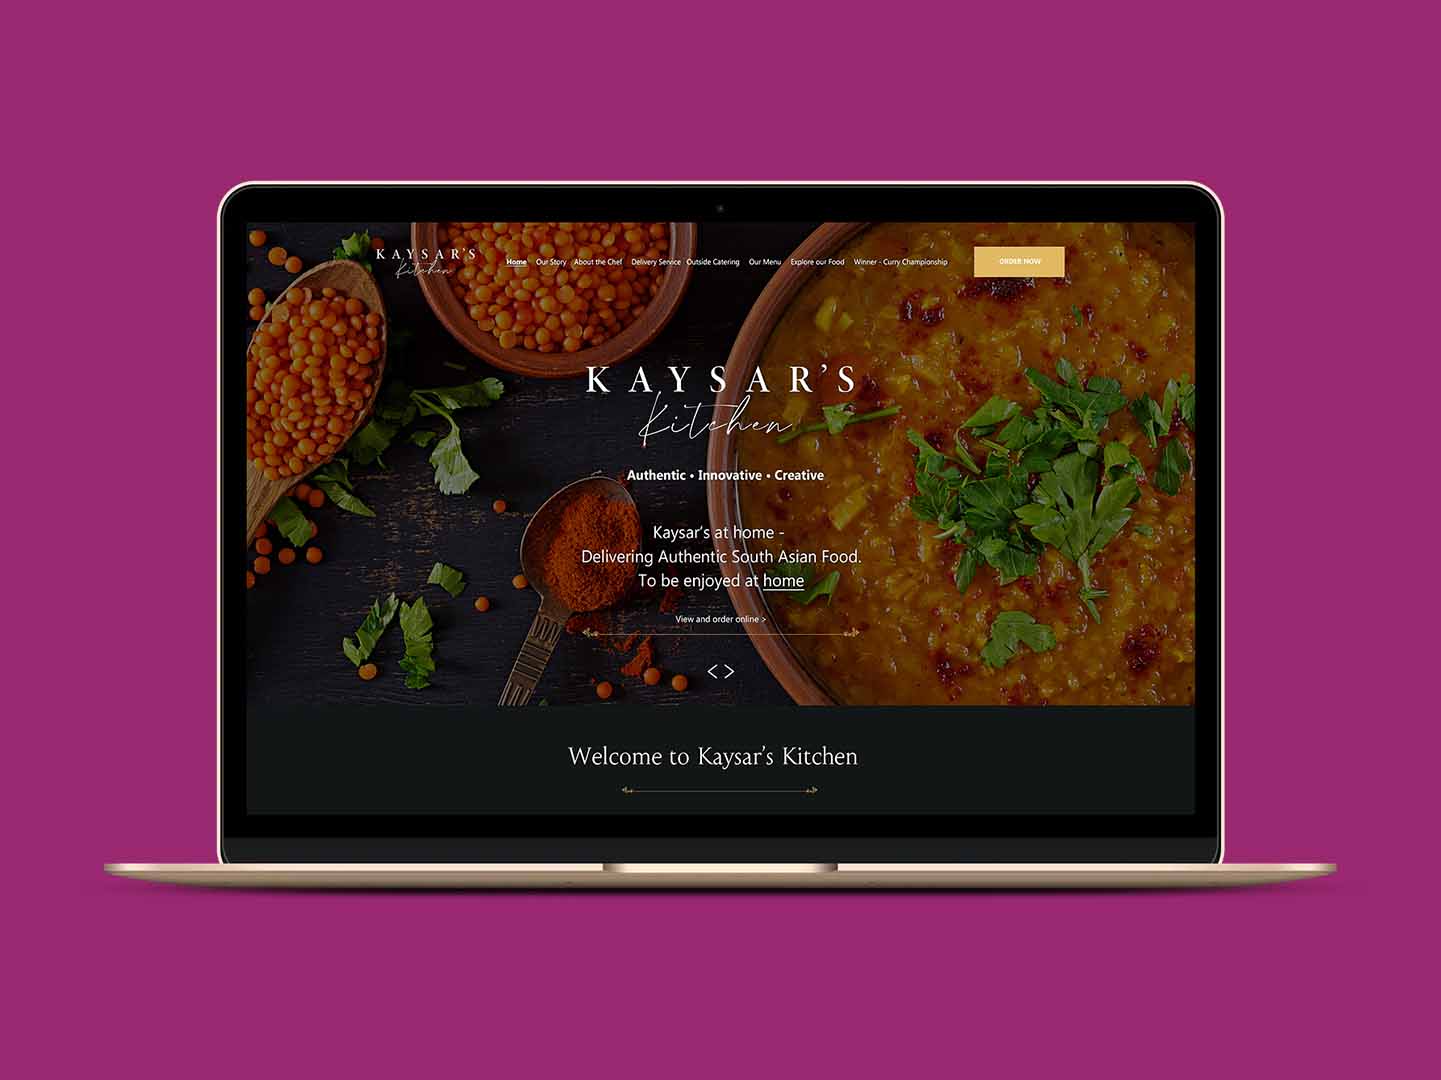 Kaysars catering website design display on a laptop